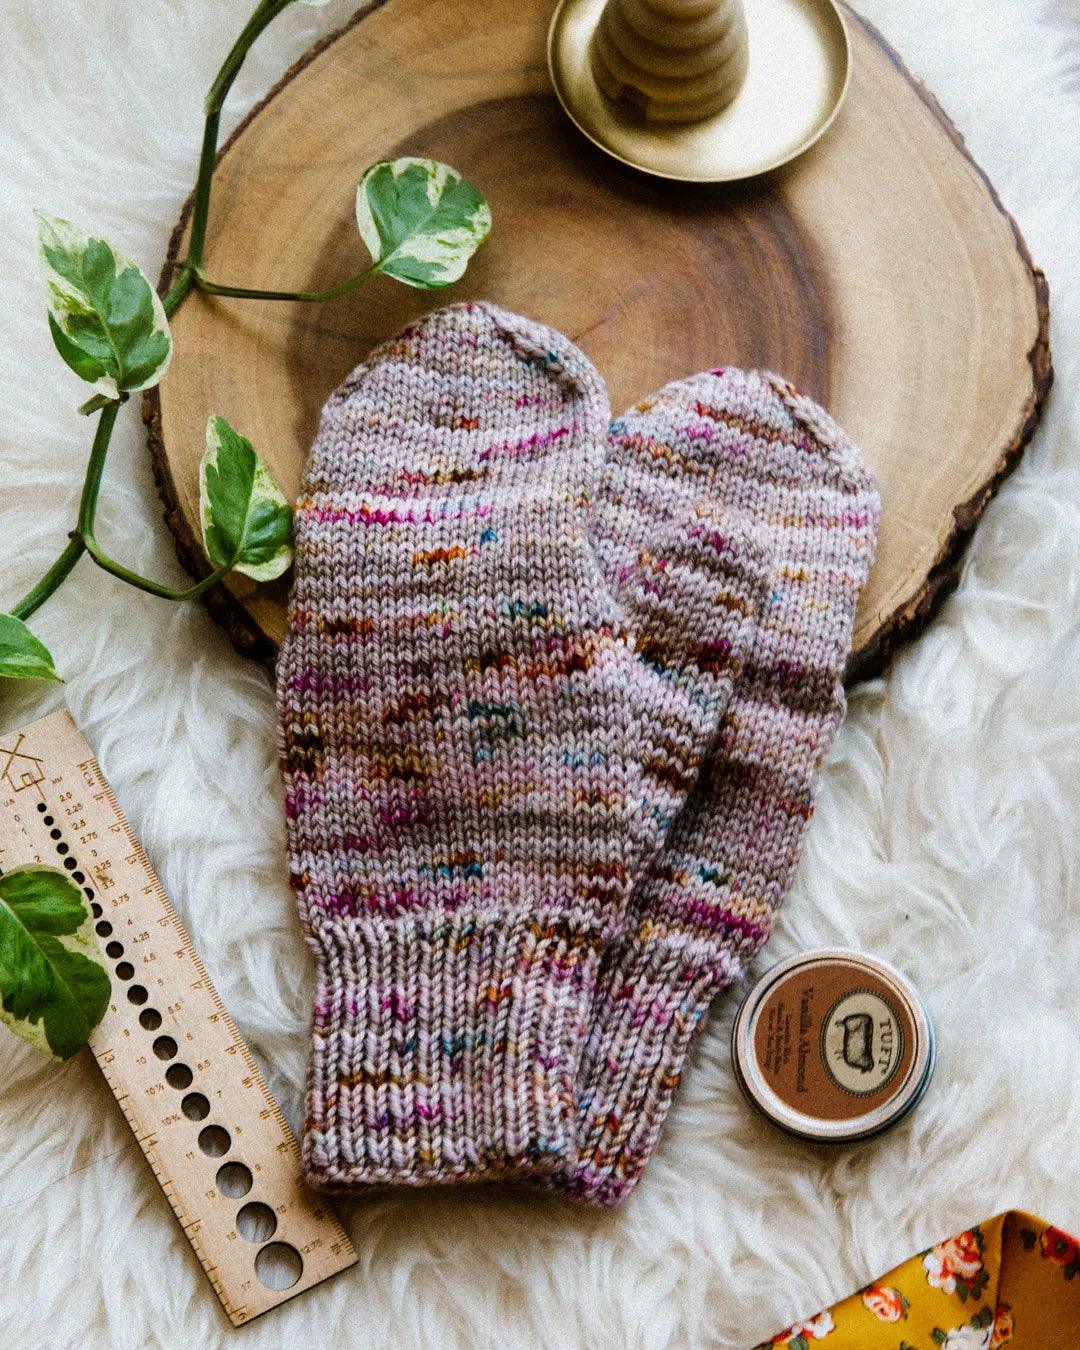 Mitten Knitting Patterns - Aimee Sher Makes